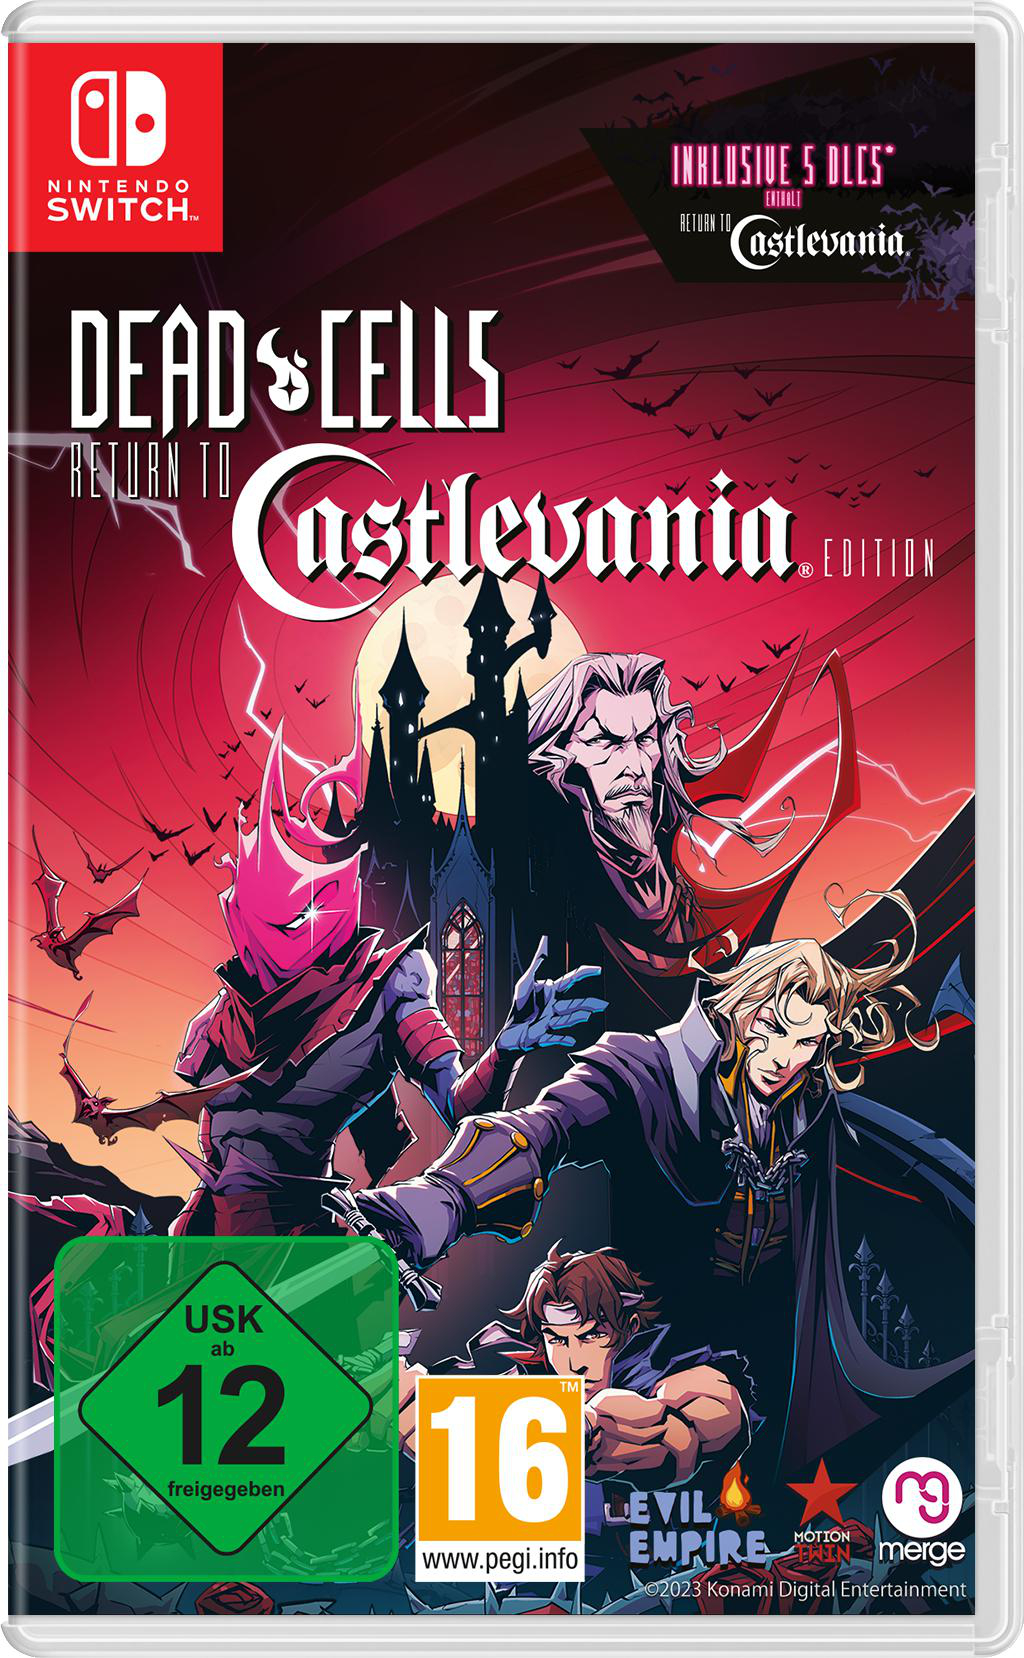 Dead Cells Return [Nintendo Switch] - to Castlevania